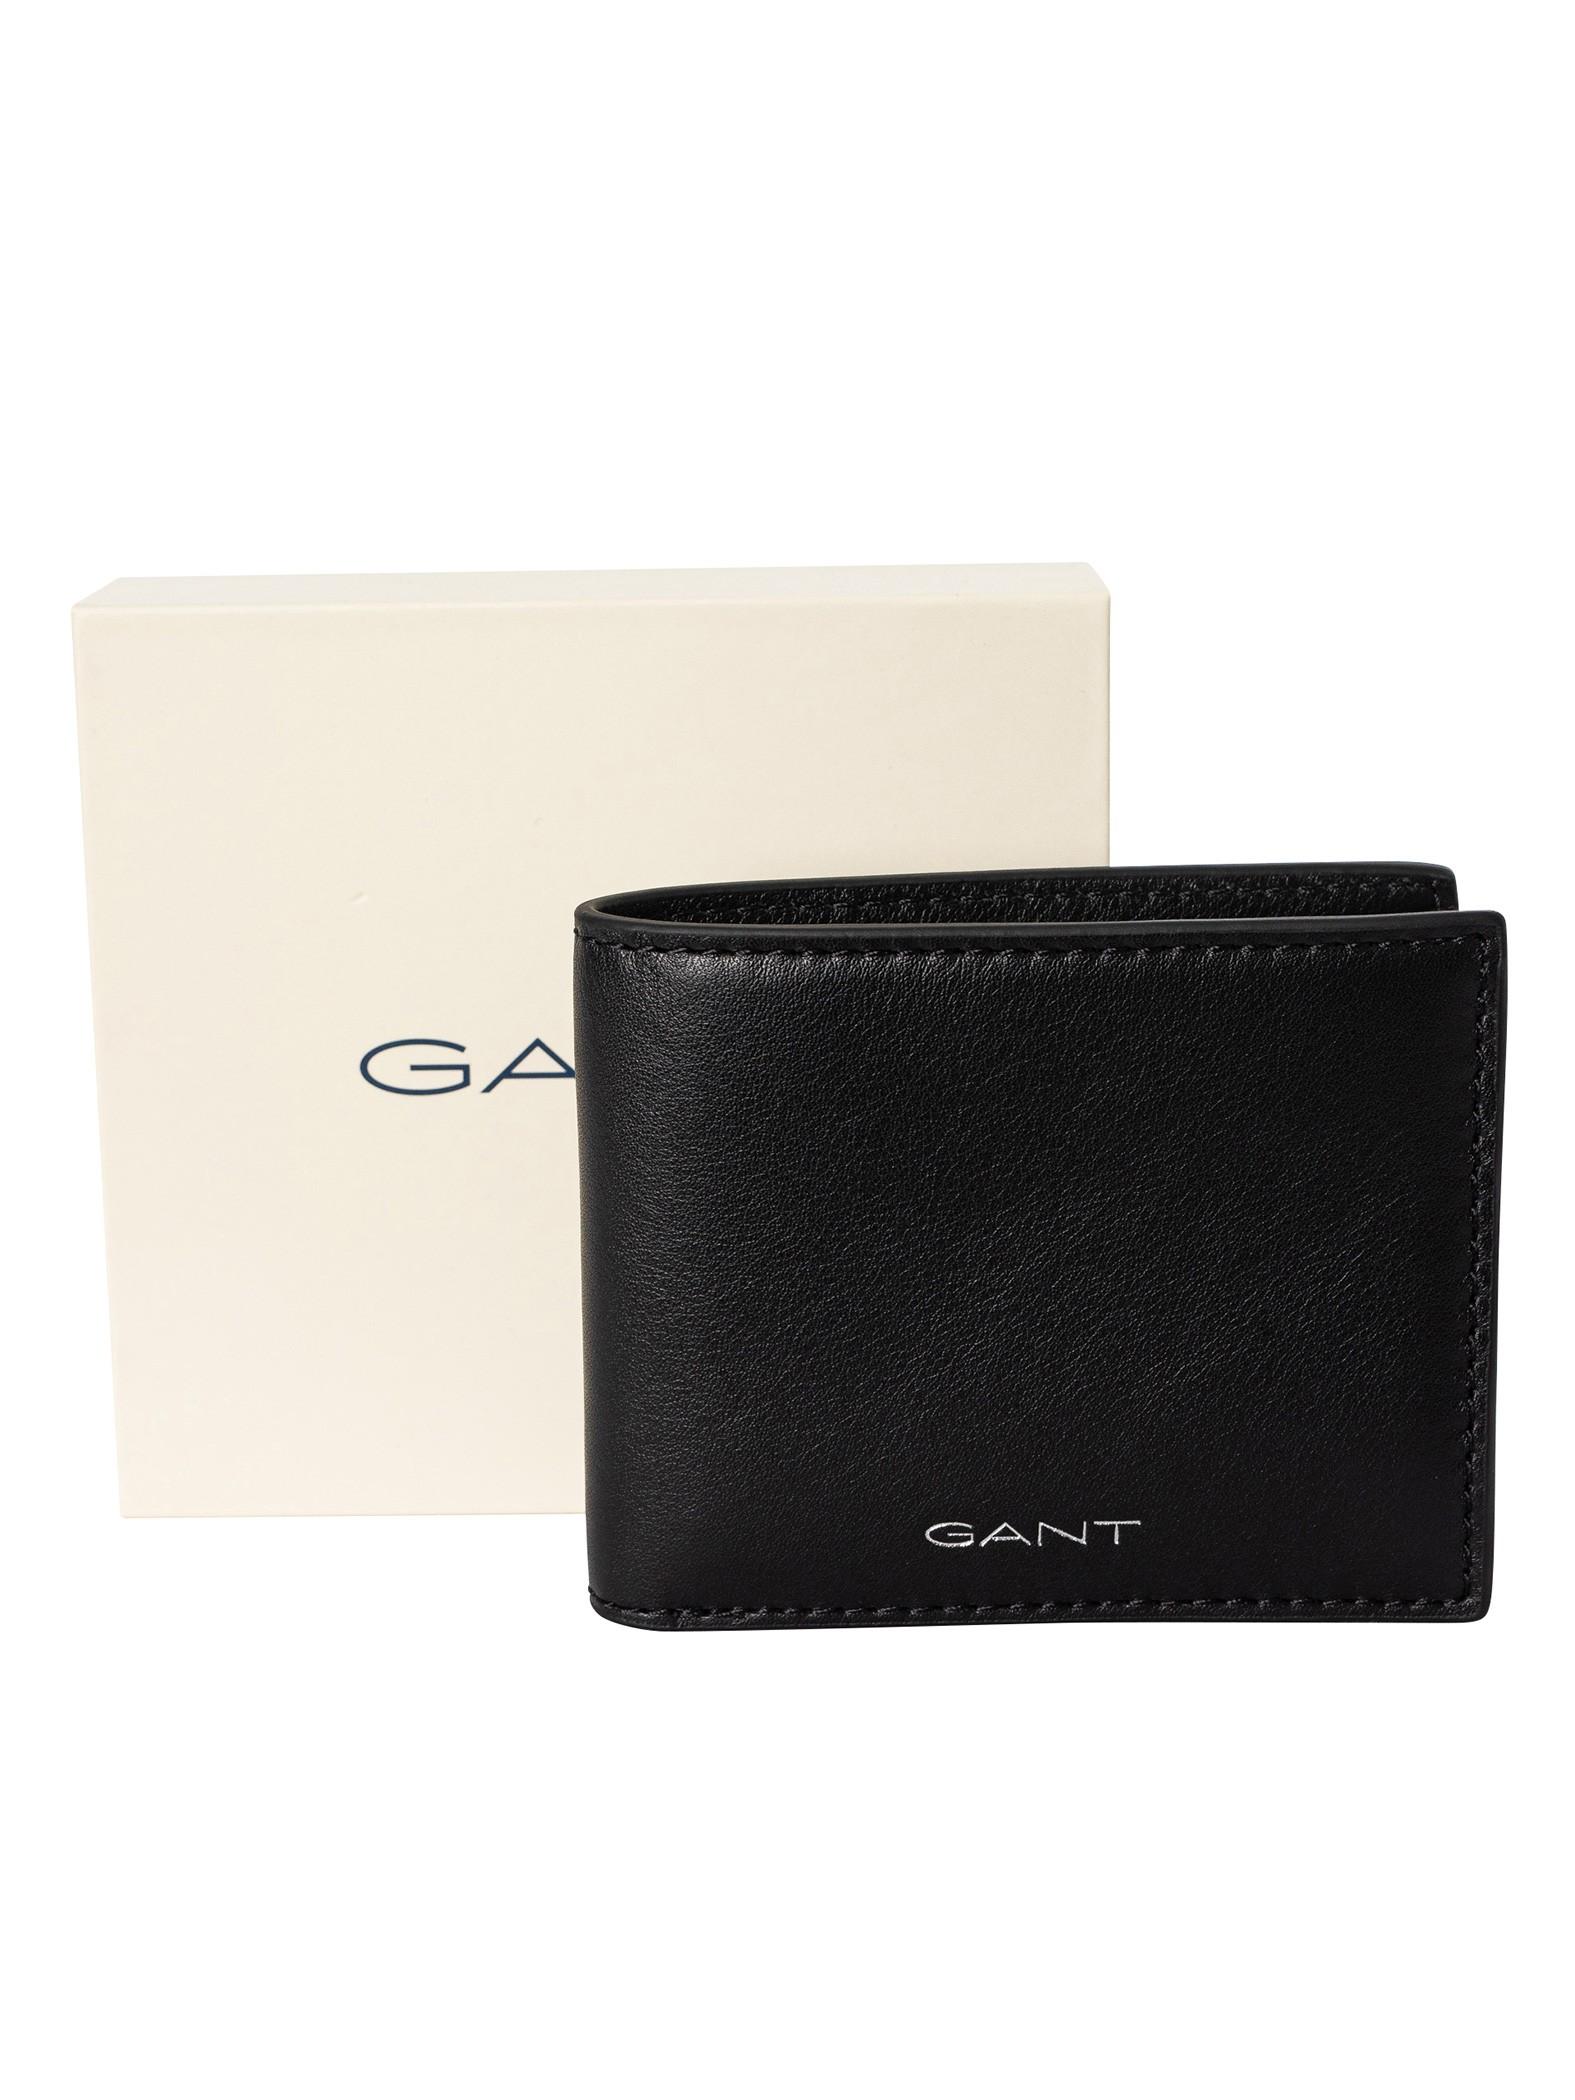 GANT Leather Bifold Wallet in Black for Men | Lyst